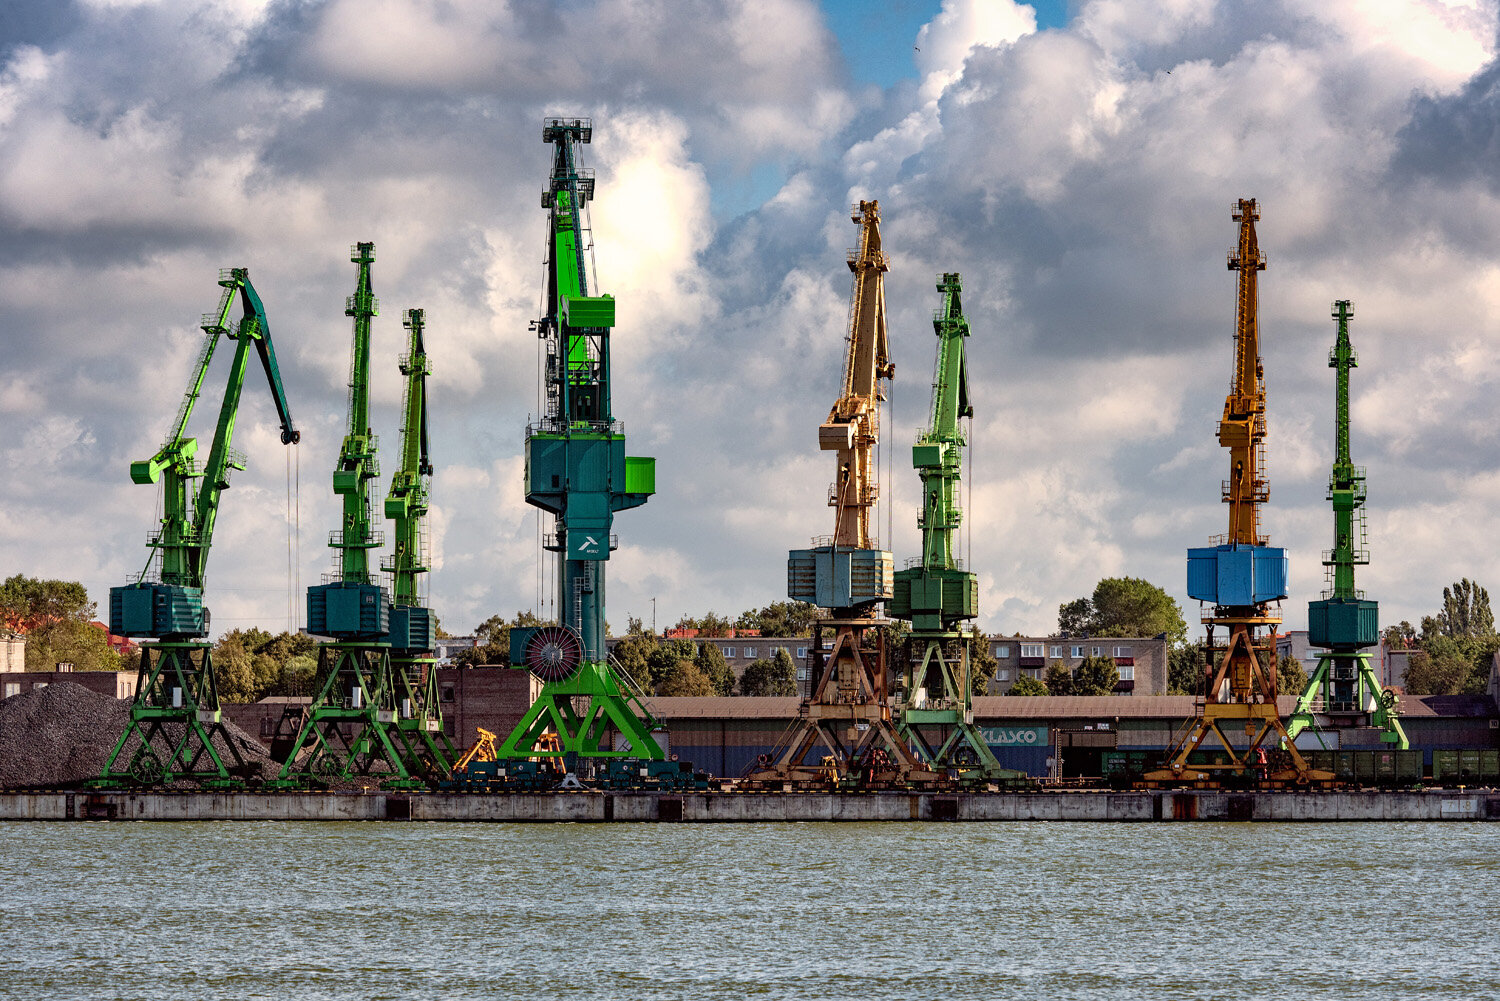 Dockyard Cranes, Klaepeda, Lithuania